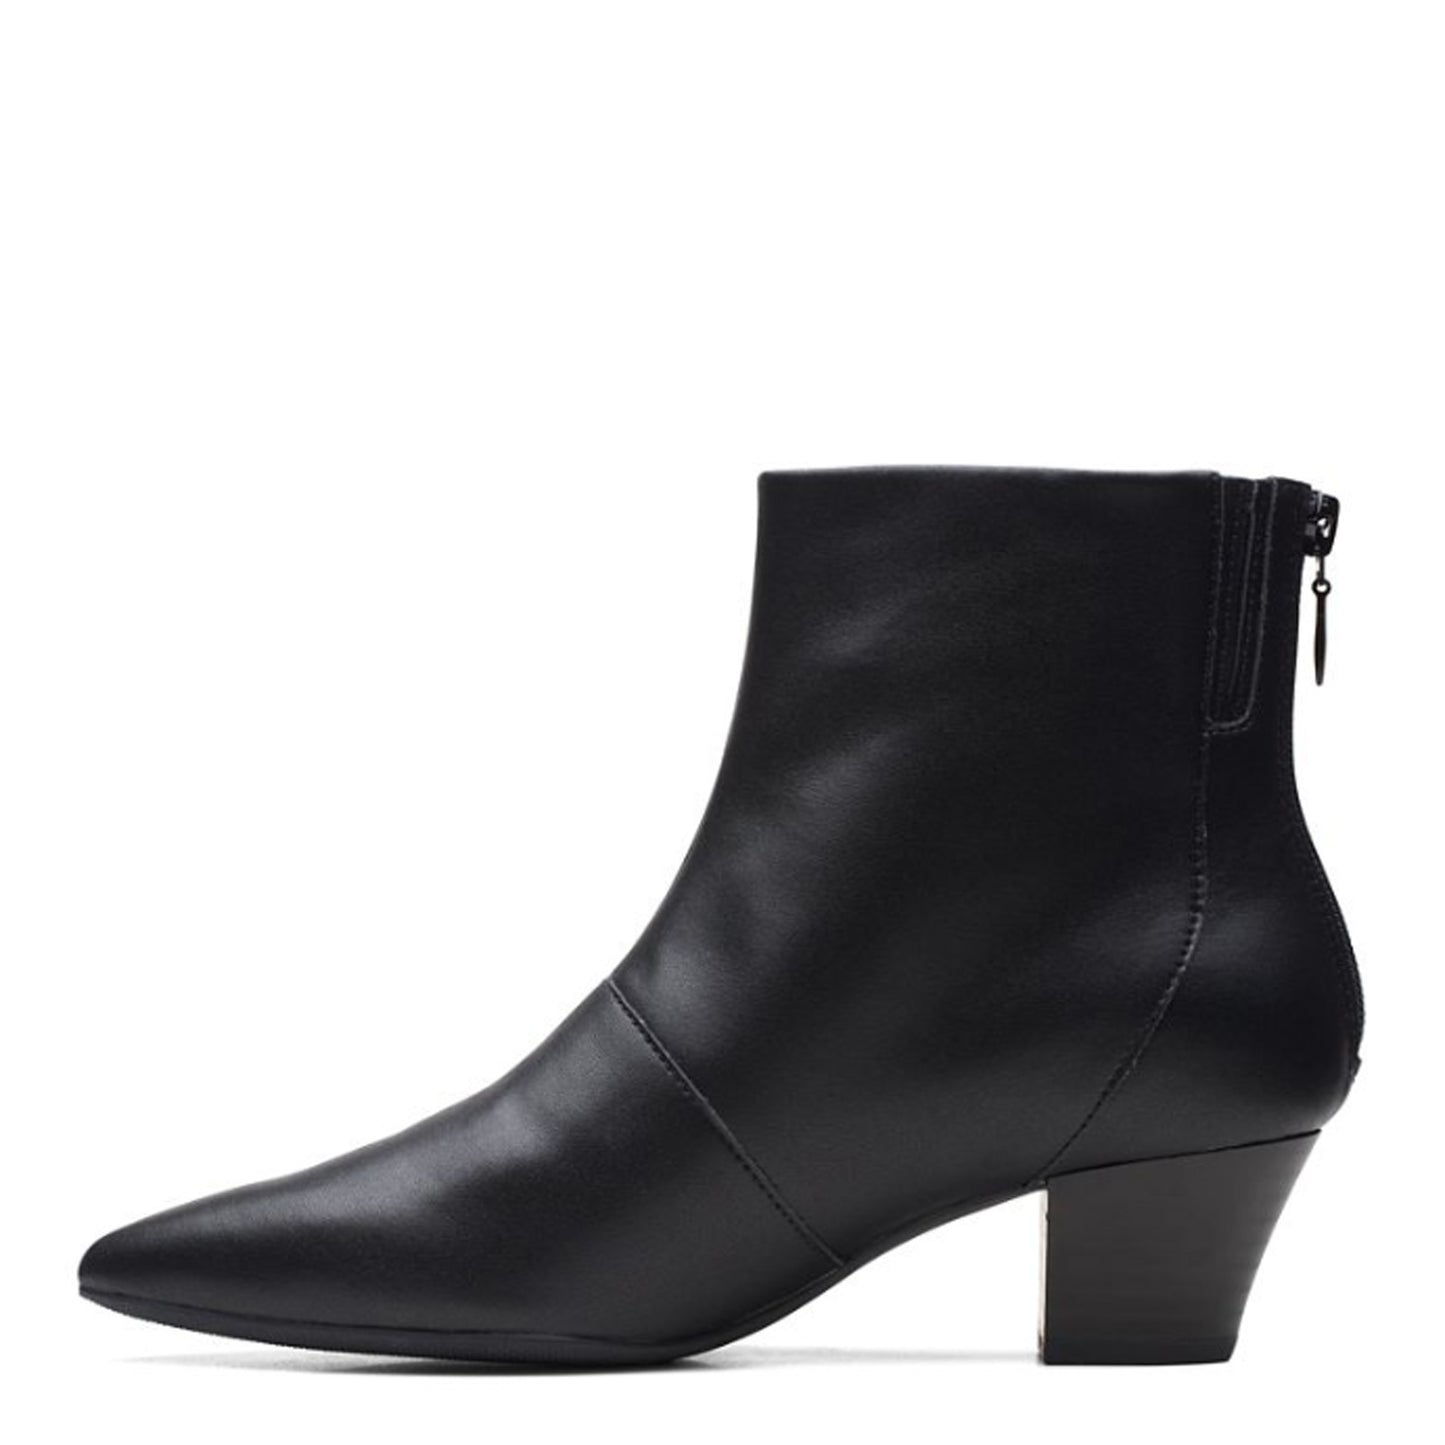 Peltz Shoes  Women's Clarks Teresa Boot BLACK LEATHER 26167841